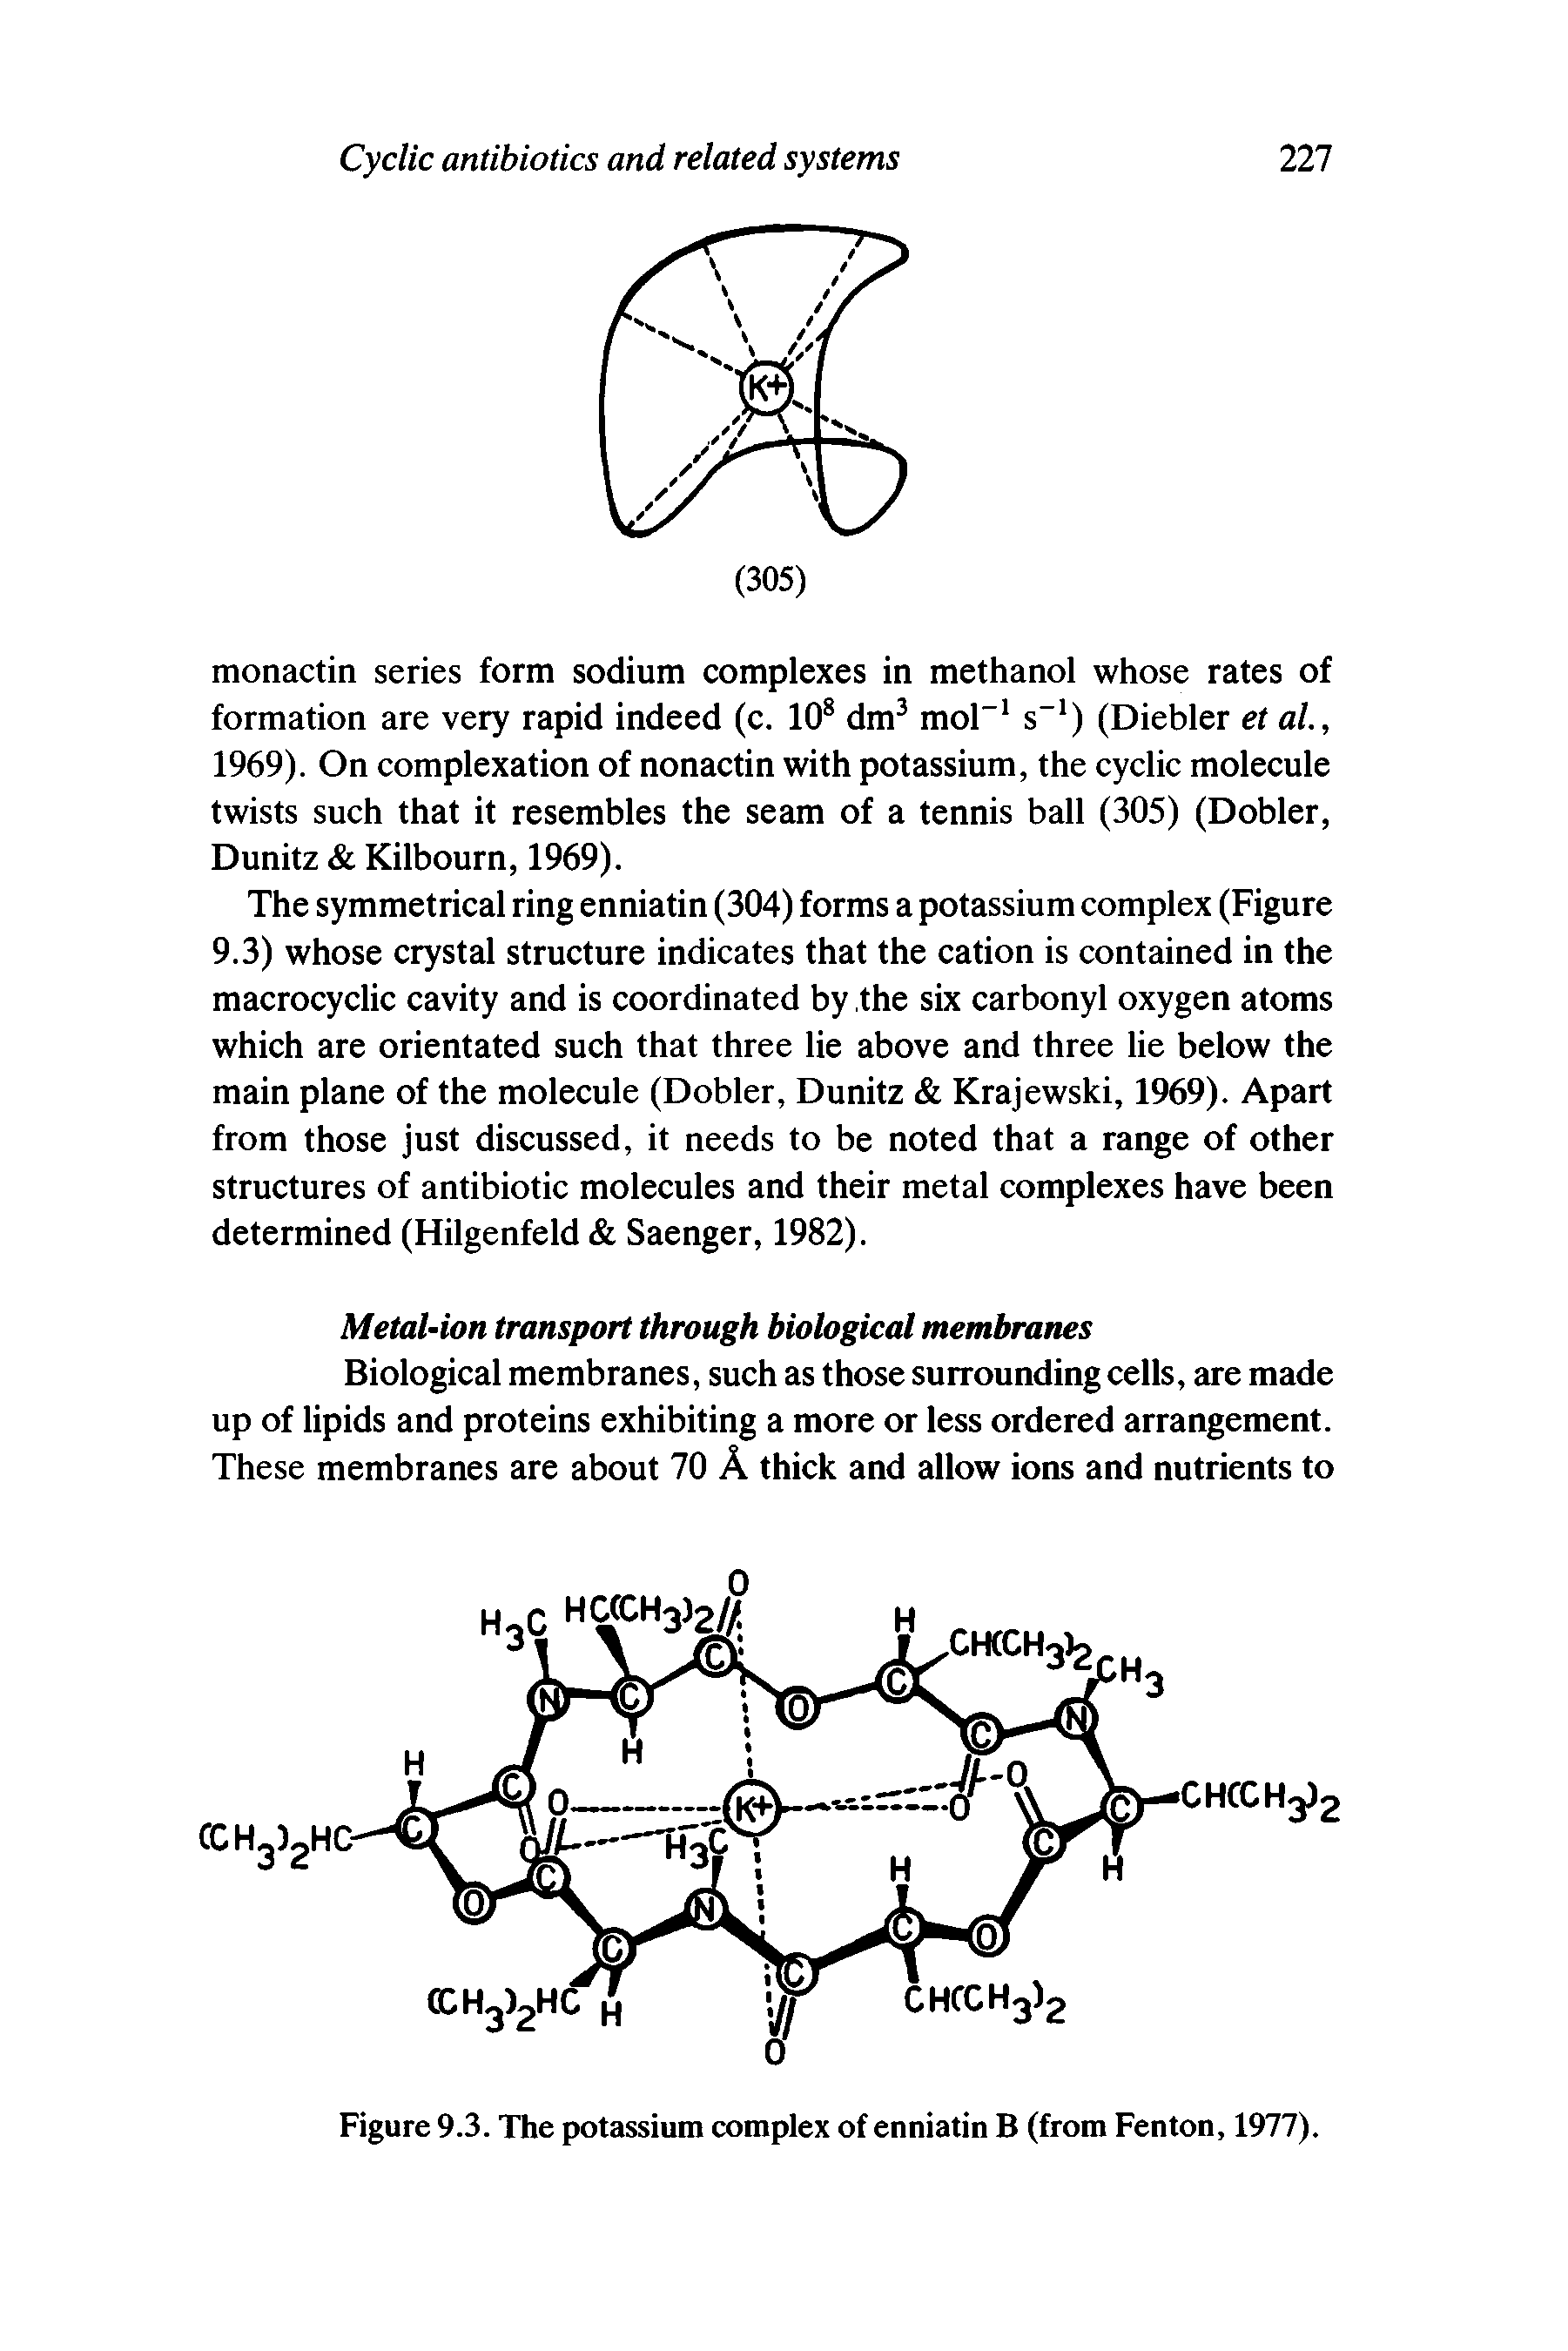 Figure 9.3. The potassium complex of enniatin B (from Fenton, 1977).